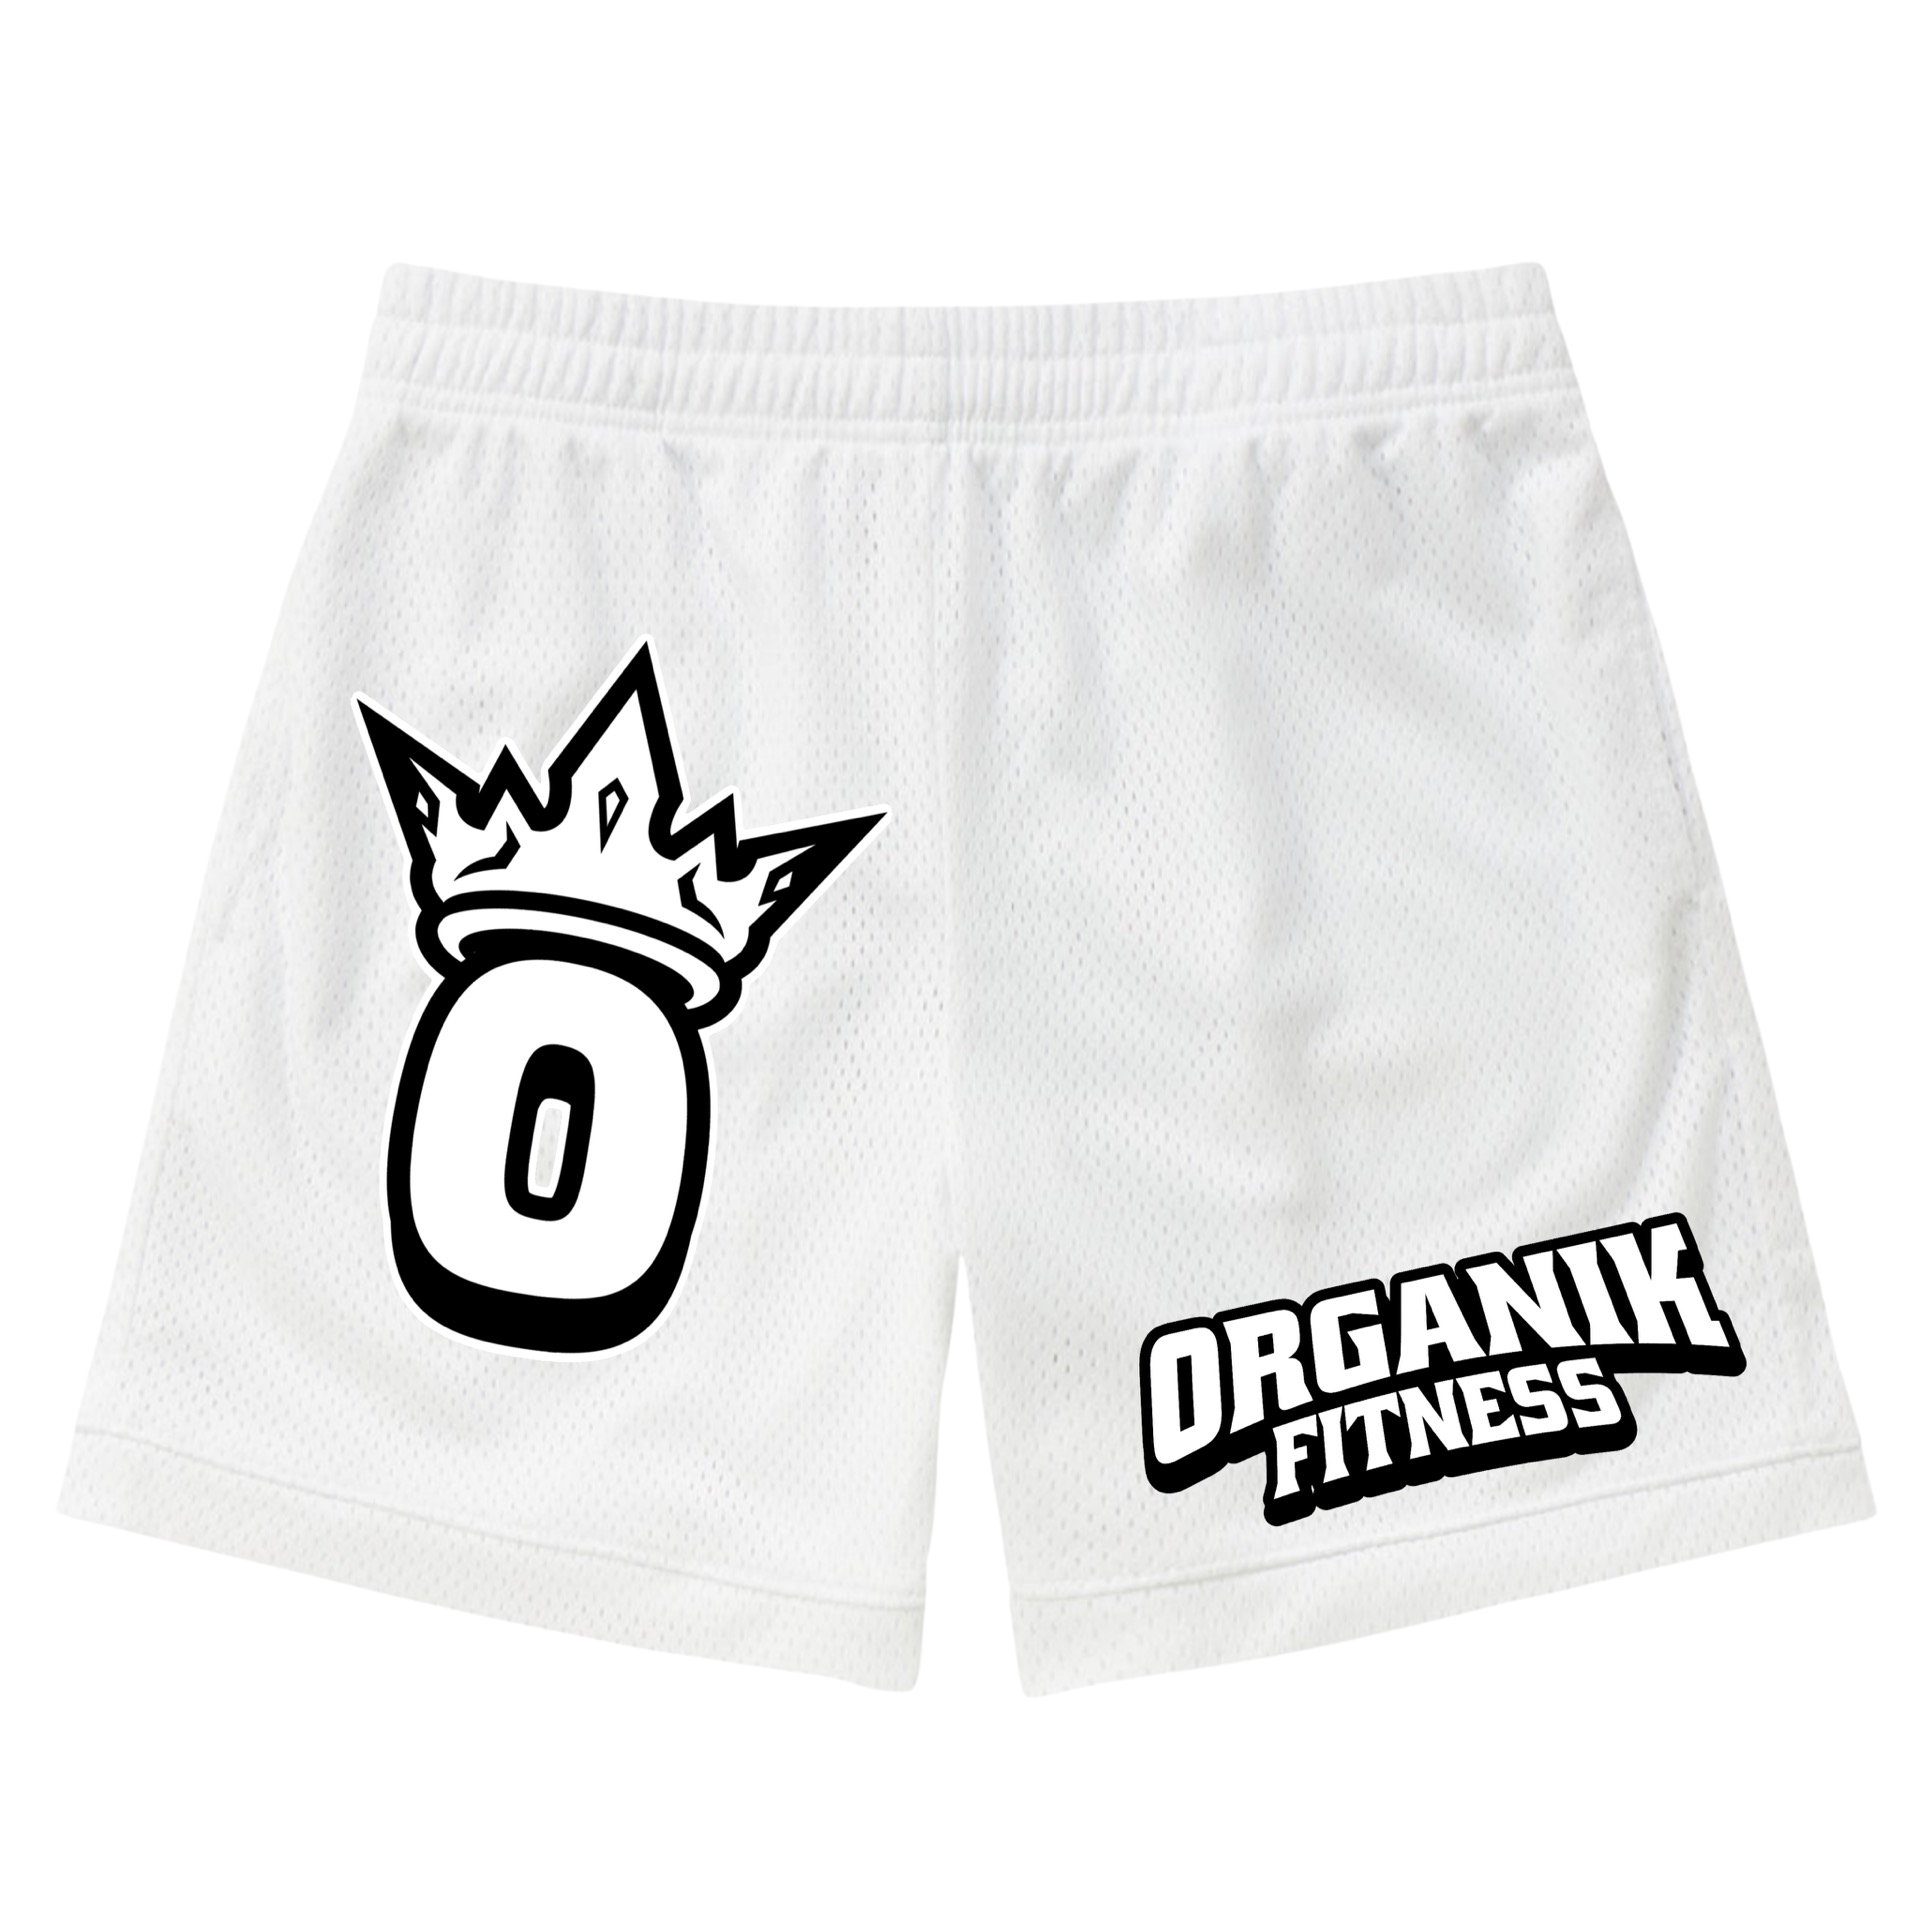 Organik Fitness - Men's Workout Mesh Shorts - Breathable - White